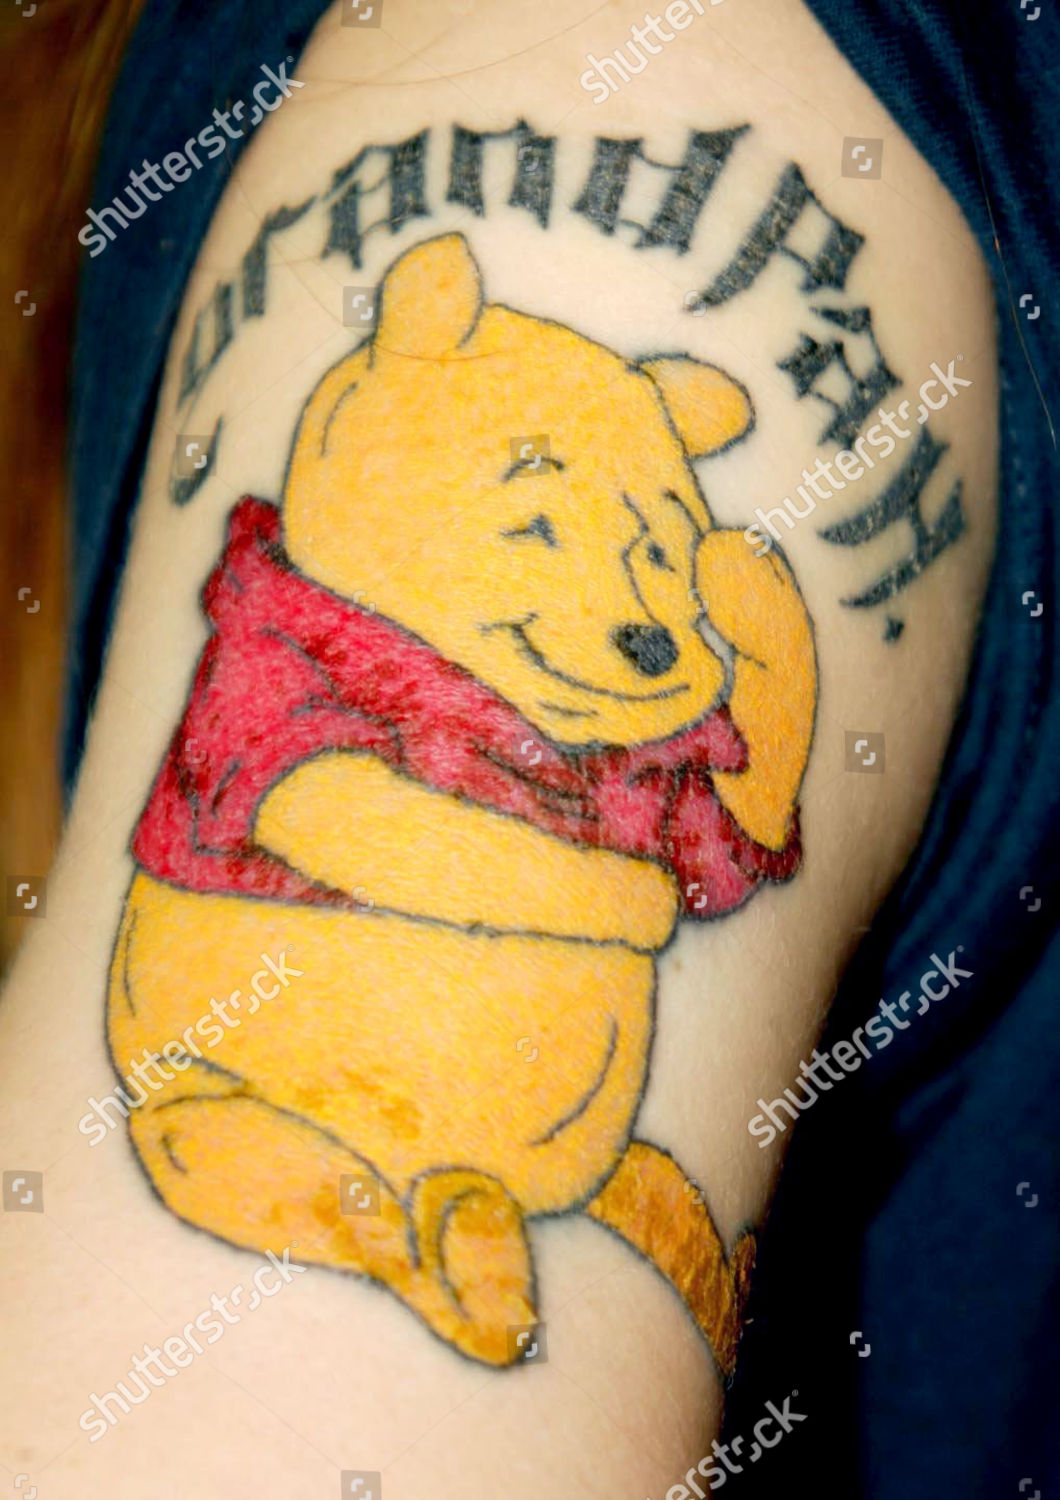 diane patron add whinnie the pooh tattoo photo